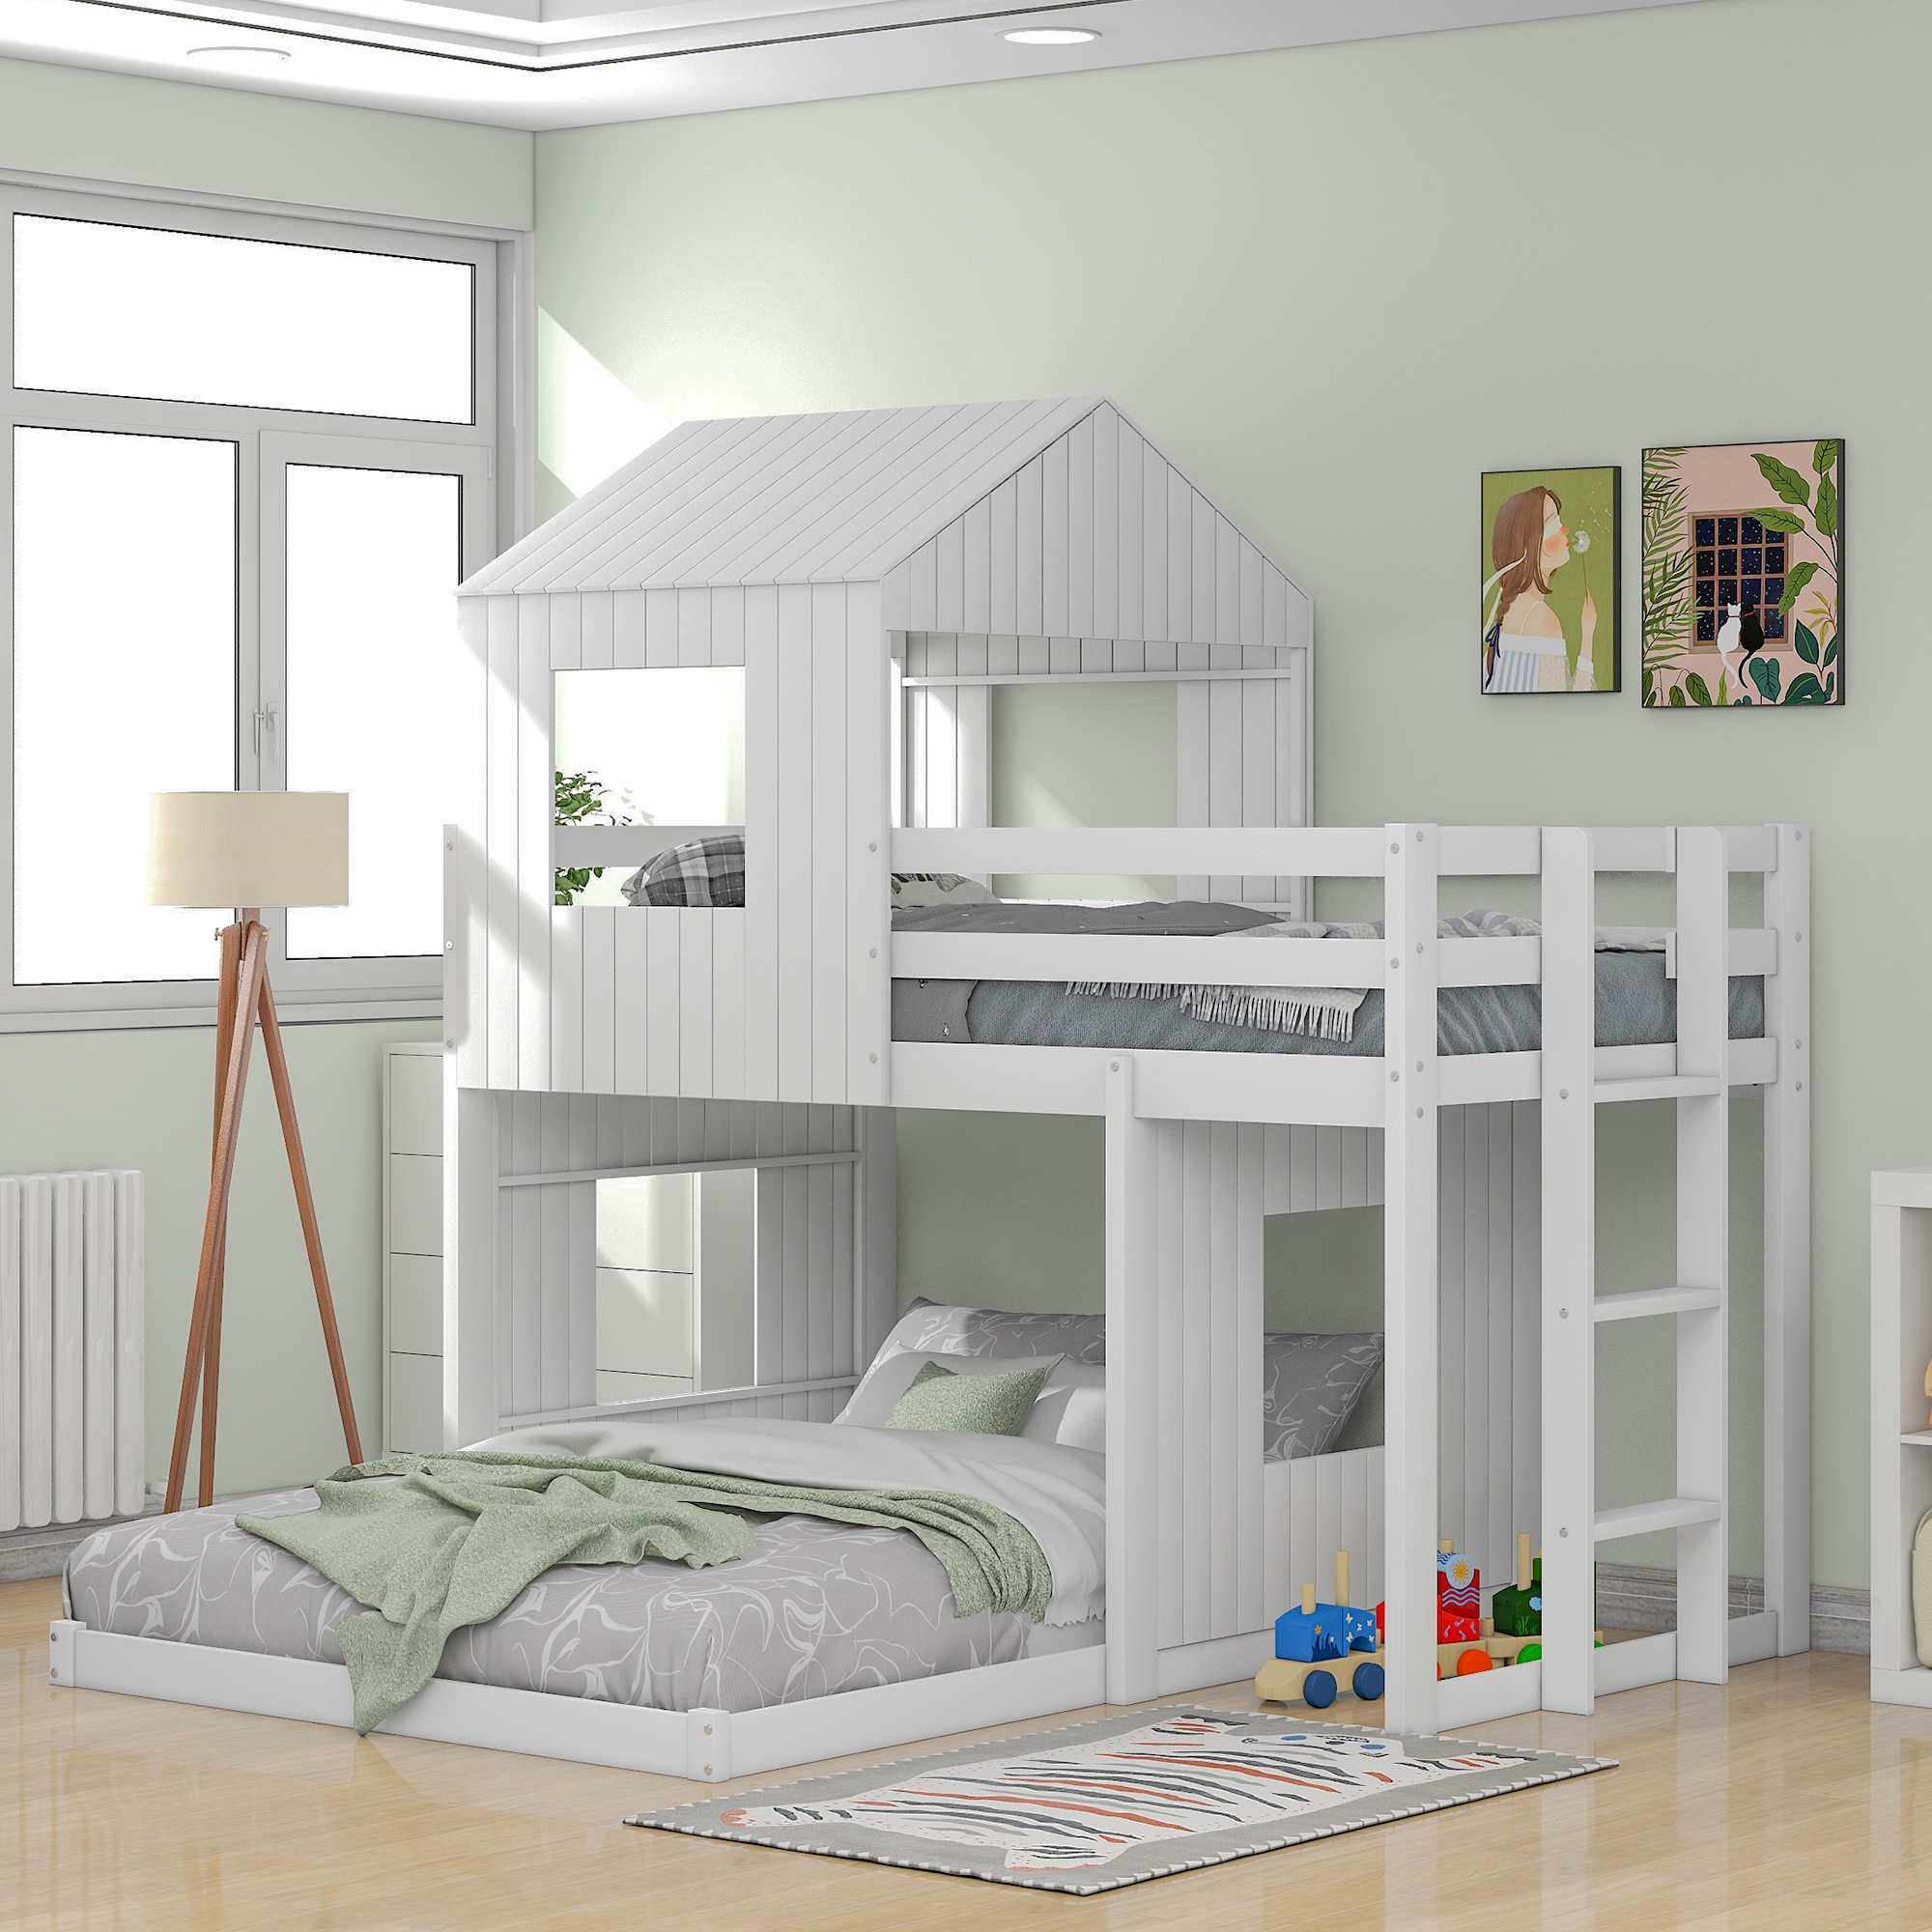 Details about   Metal Sturdy Twin Loft Bed w/ Full Guardrails Ladder Teens Bedroom Furniture US 